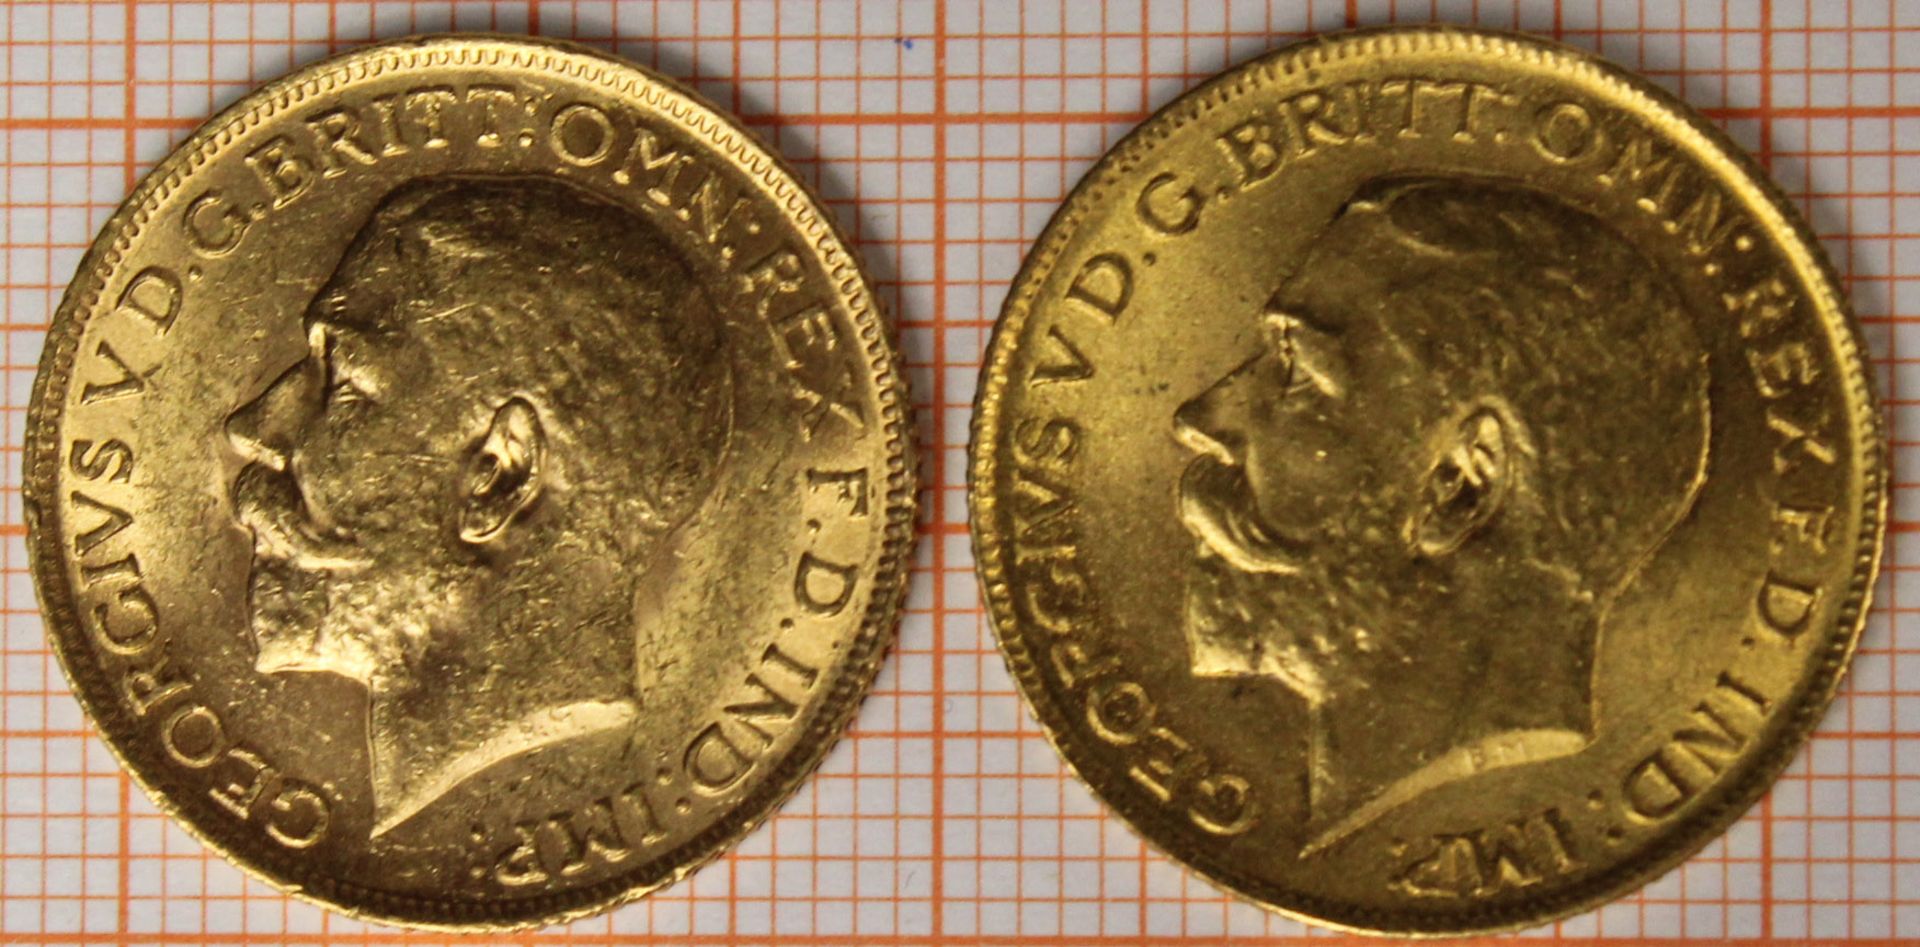 2x Sovereign Goldmünzen. 1914. - Image 3 of 4